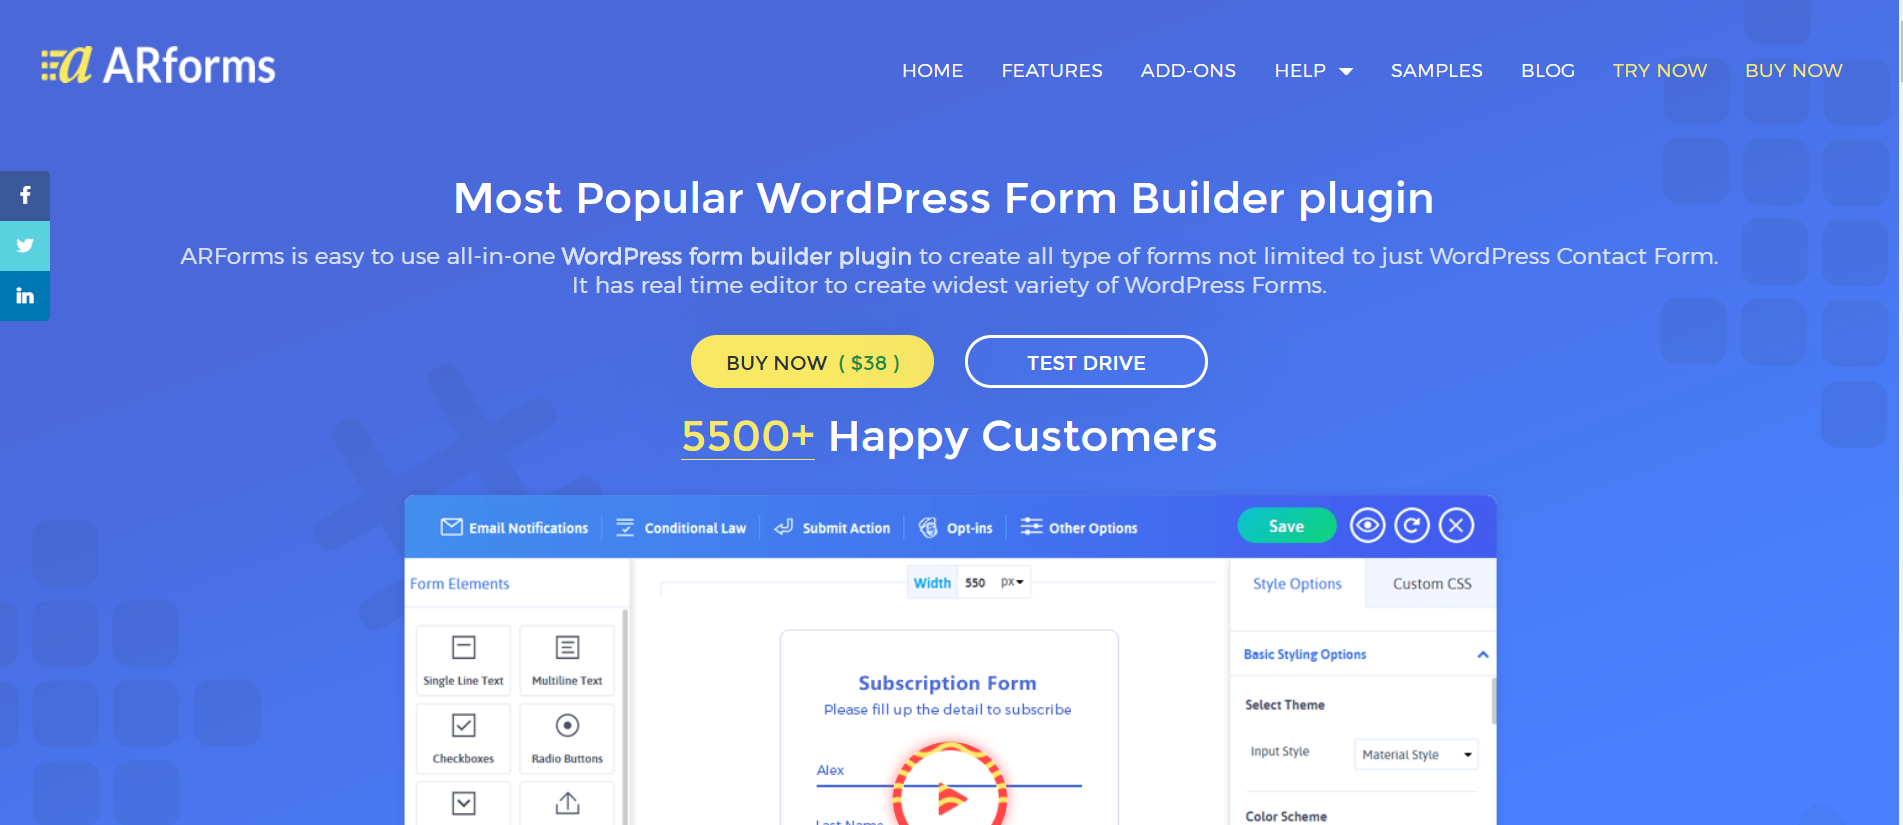  ARForms Review- Best WordPress Form Builder